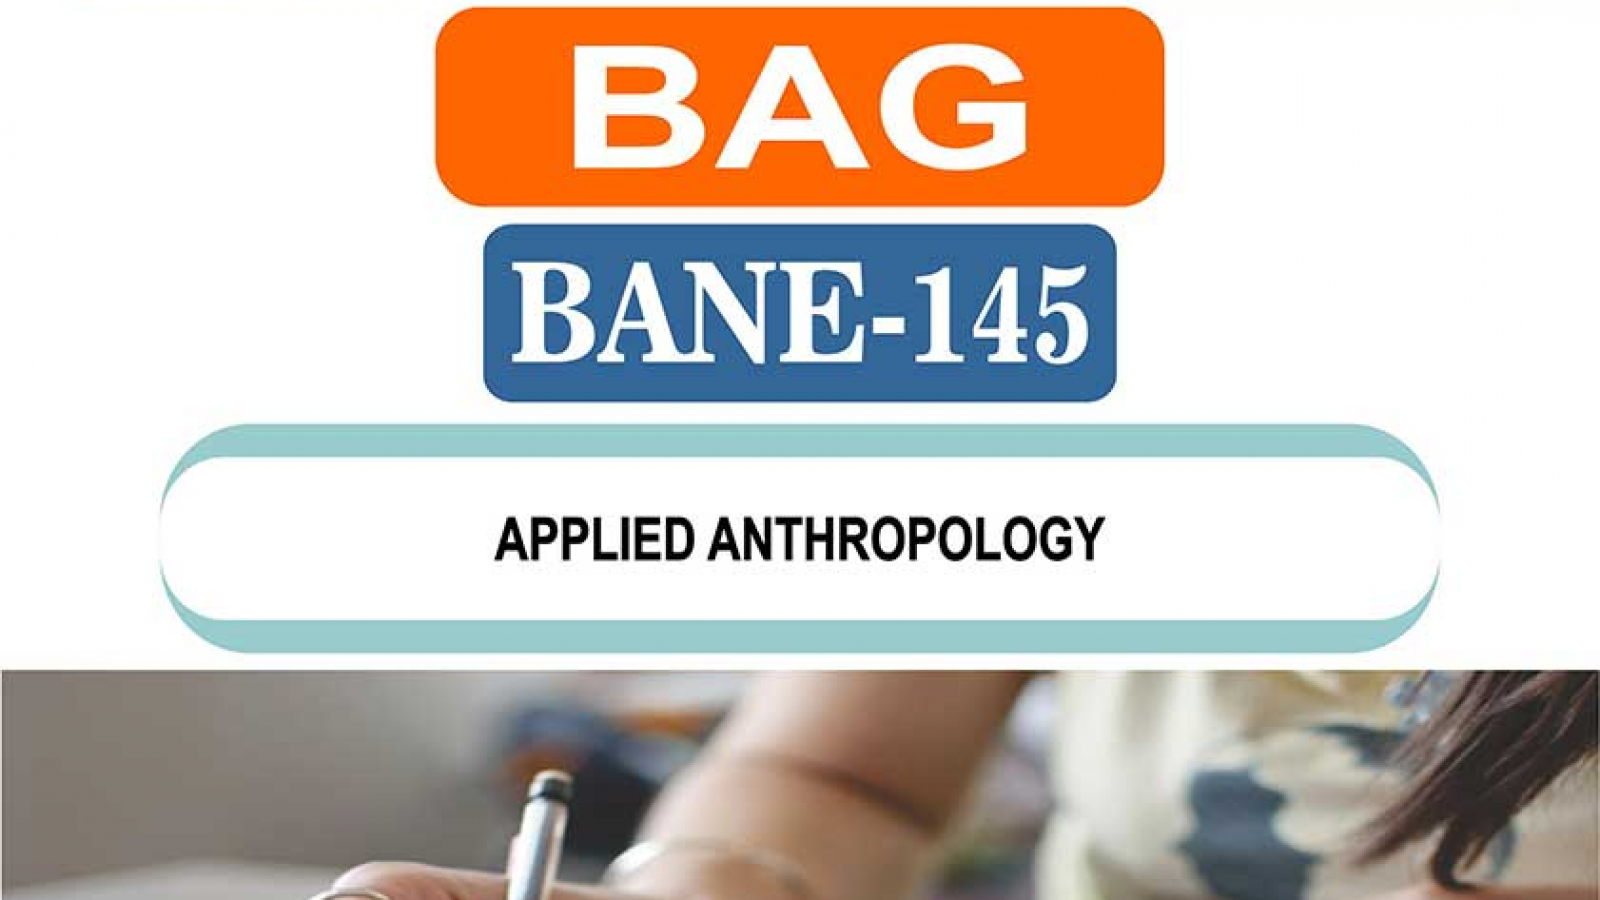 BANE-145